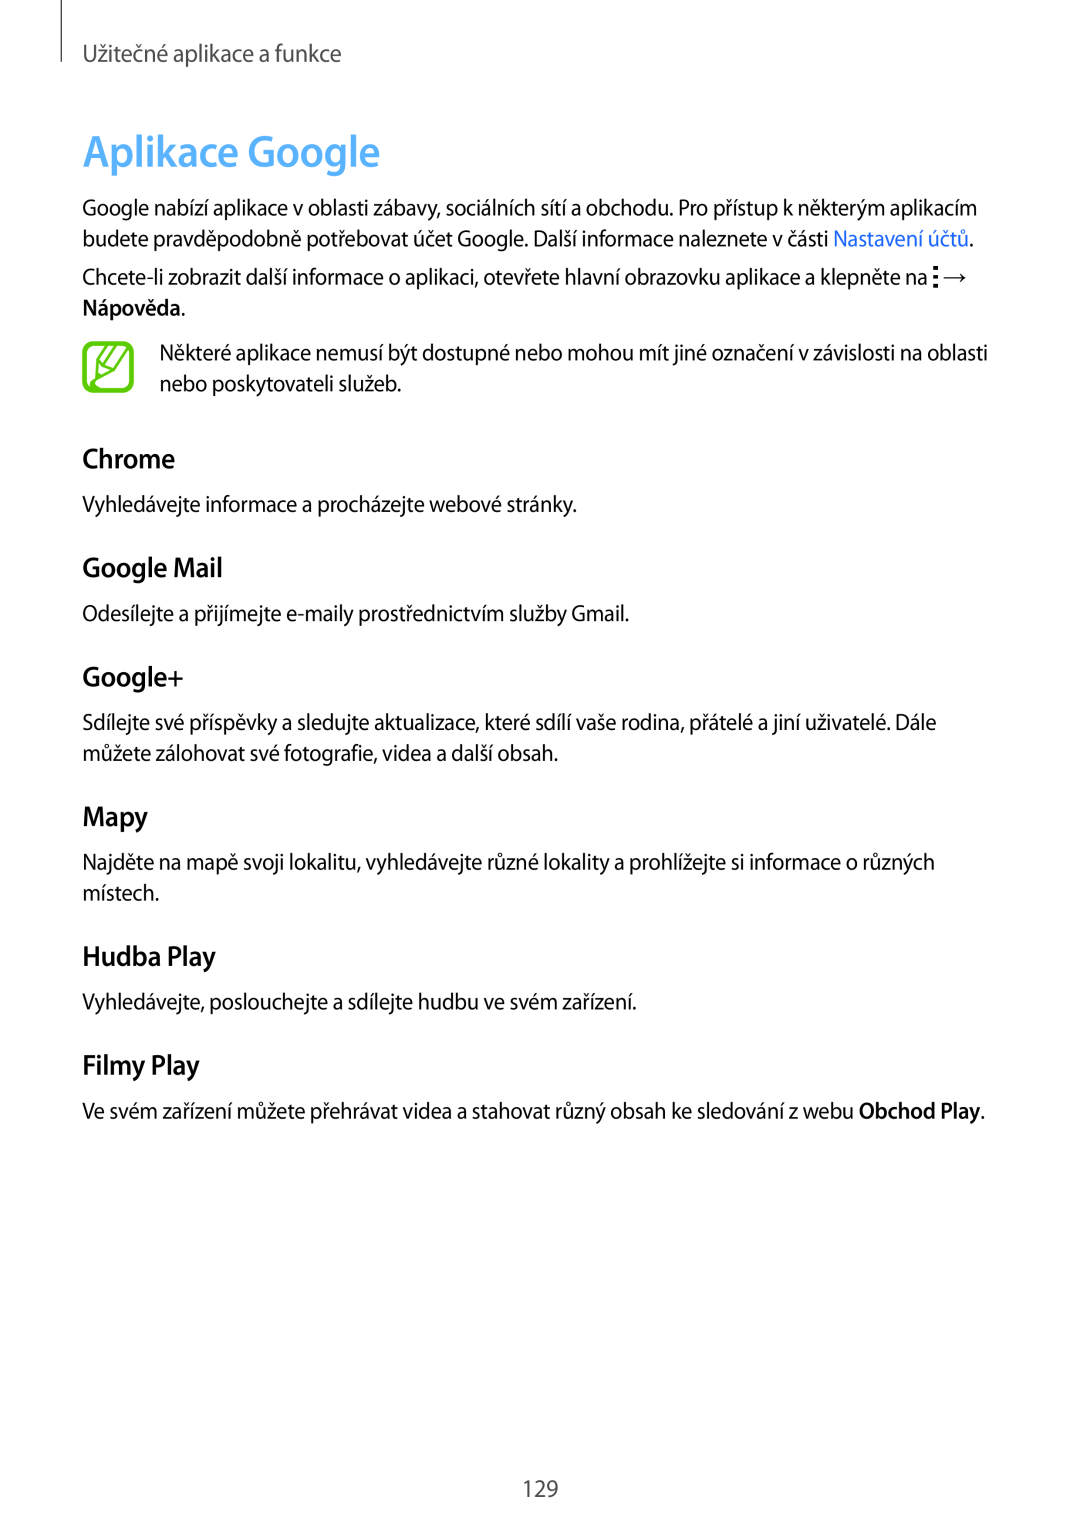 Samsung SM-T700NTSAATO, SM-T700NZWAXEO manual Aplikace Google, Chrome, Google Mail, Google+, Mapy, Hudba Play, Filmy Play 